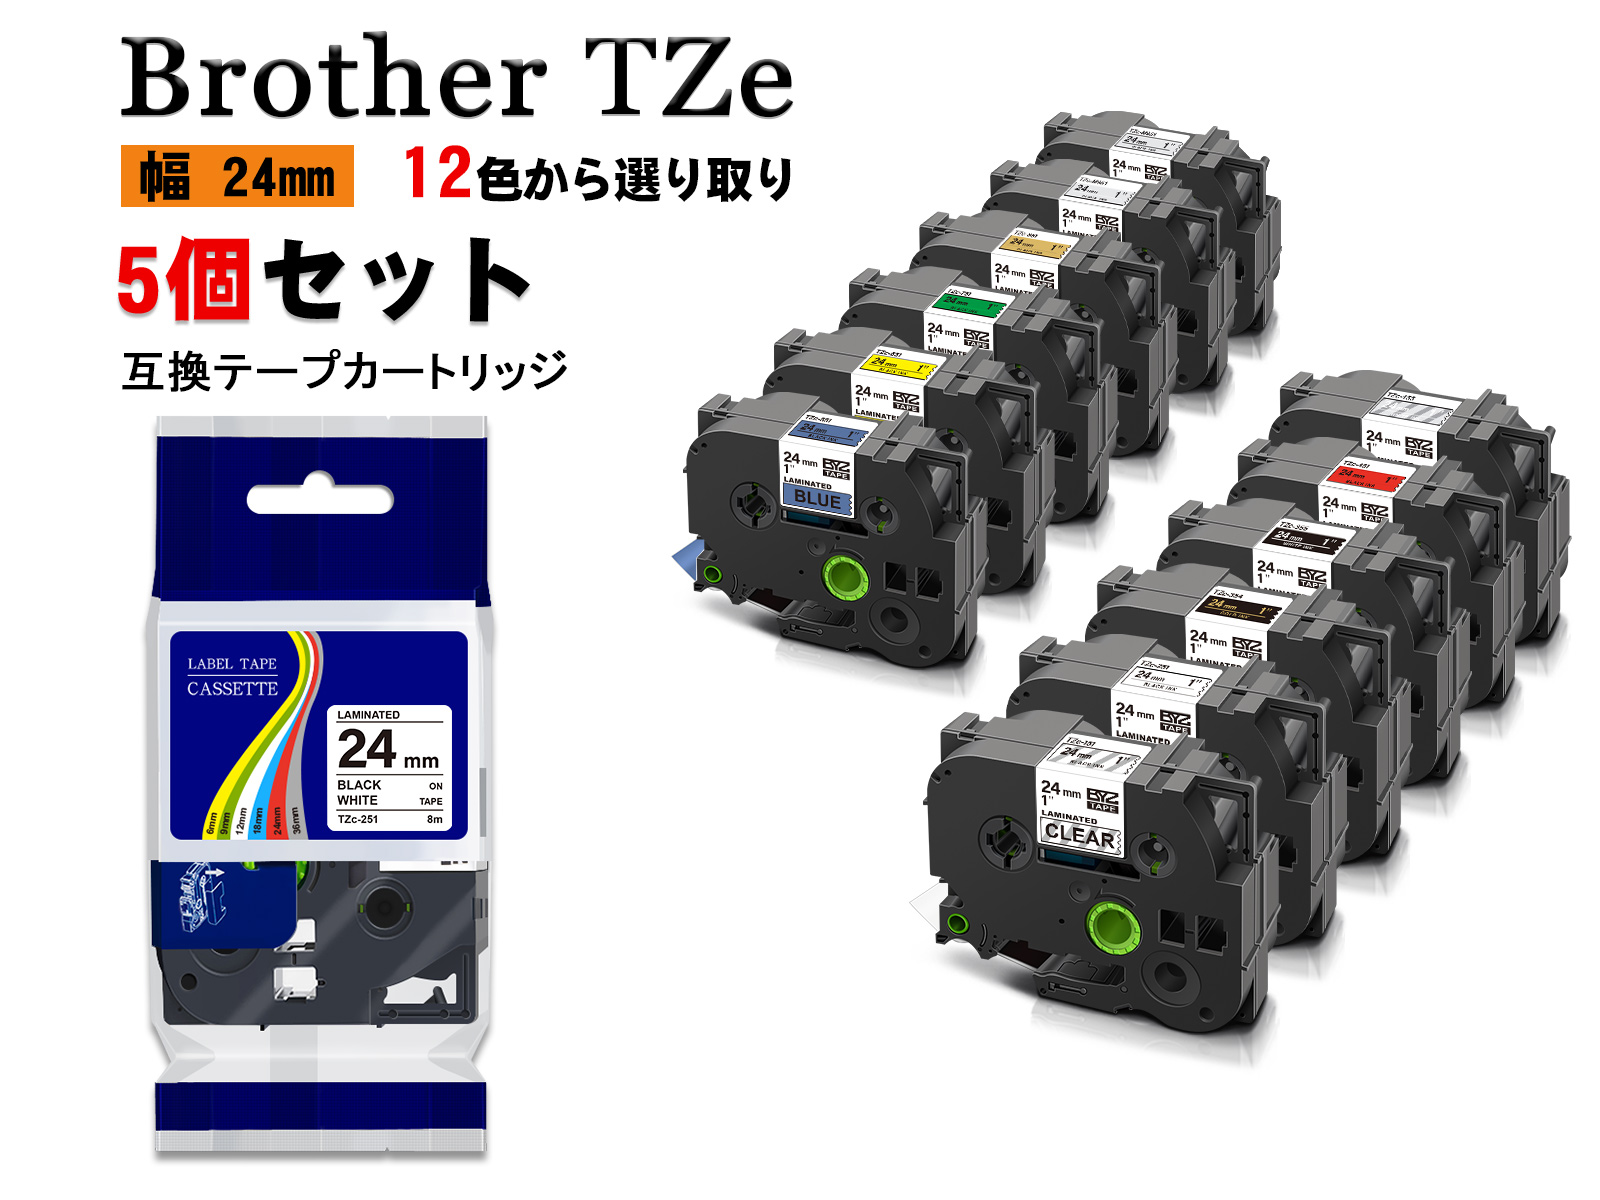 Tzeテープ 36mm幅X8m巻 8色選択 互換品 2個 P-Touch用 - 店舗用品